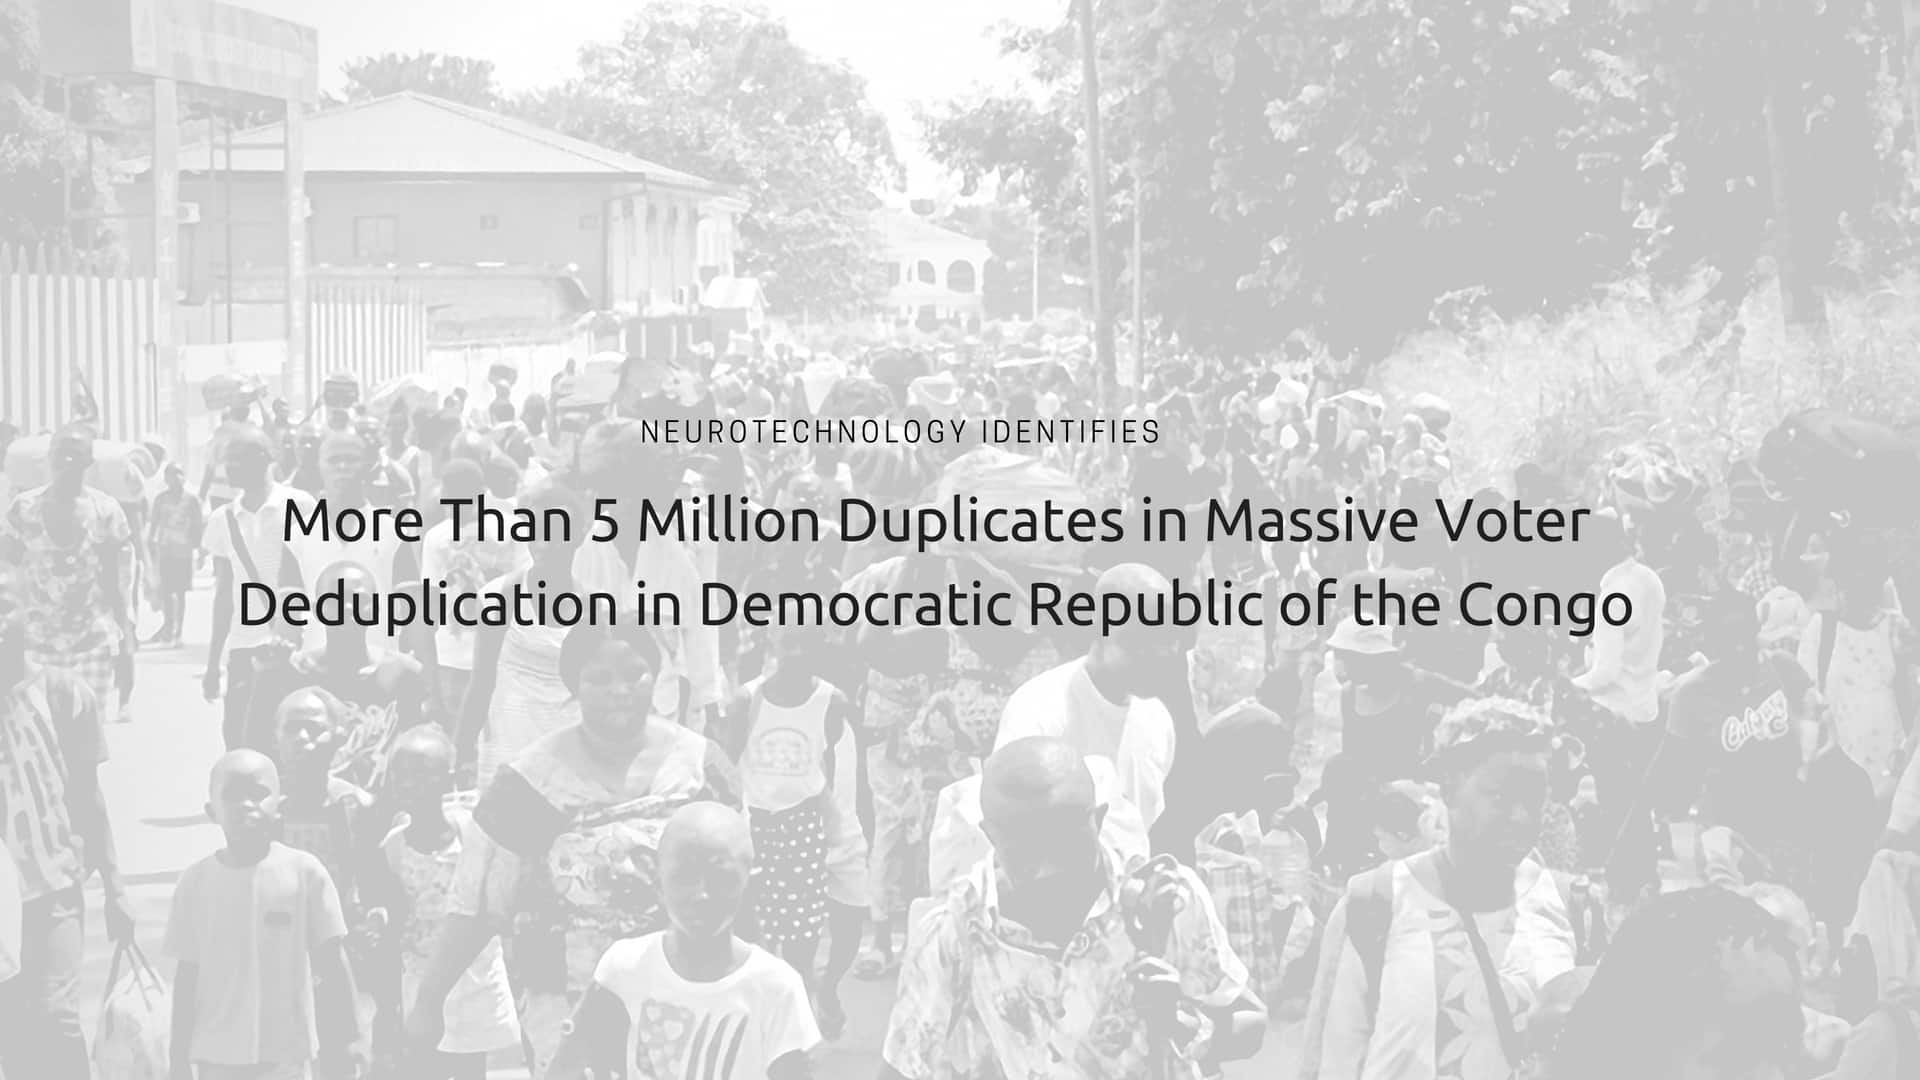 DR Congo Voter Registration Project